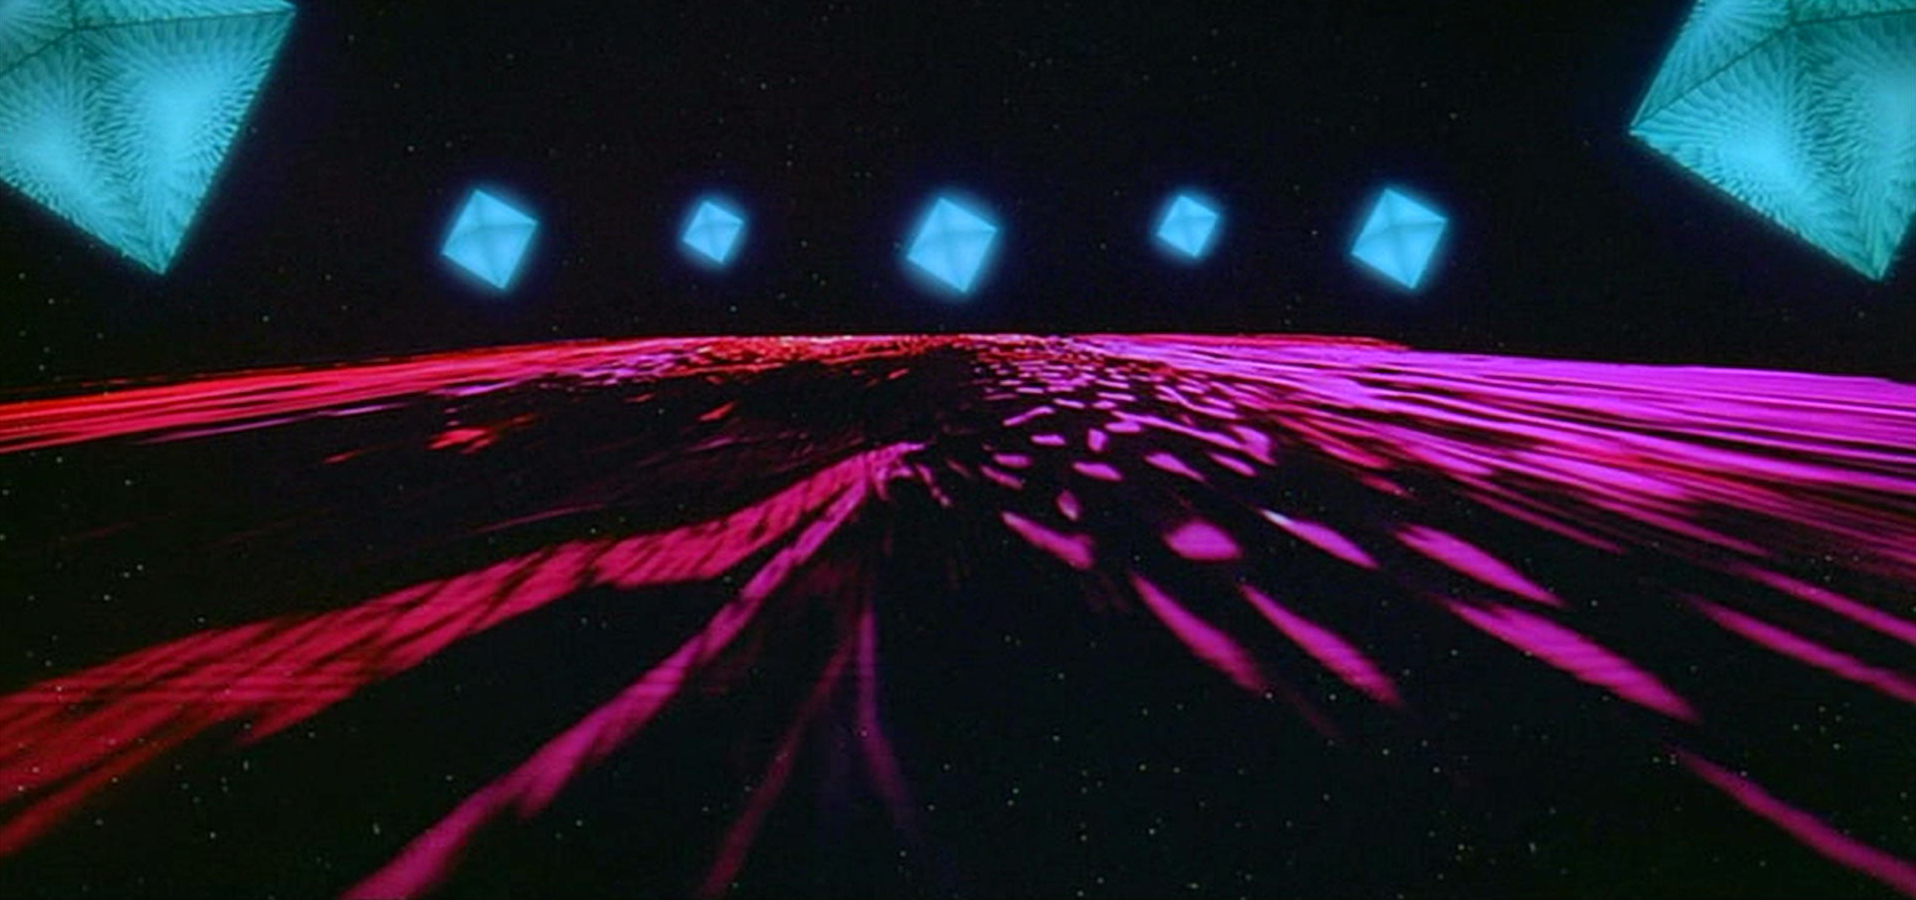 2001: A Space Odyssey - Stanley Kubrick - blue diamonds - magenta lights